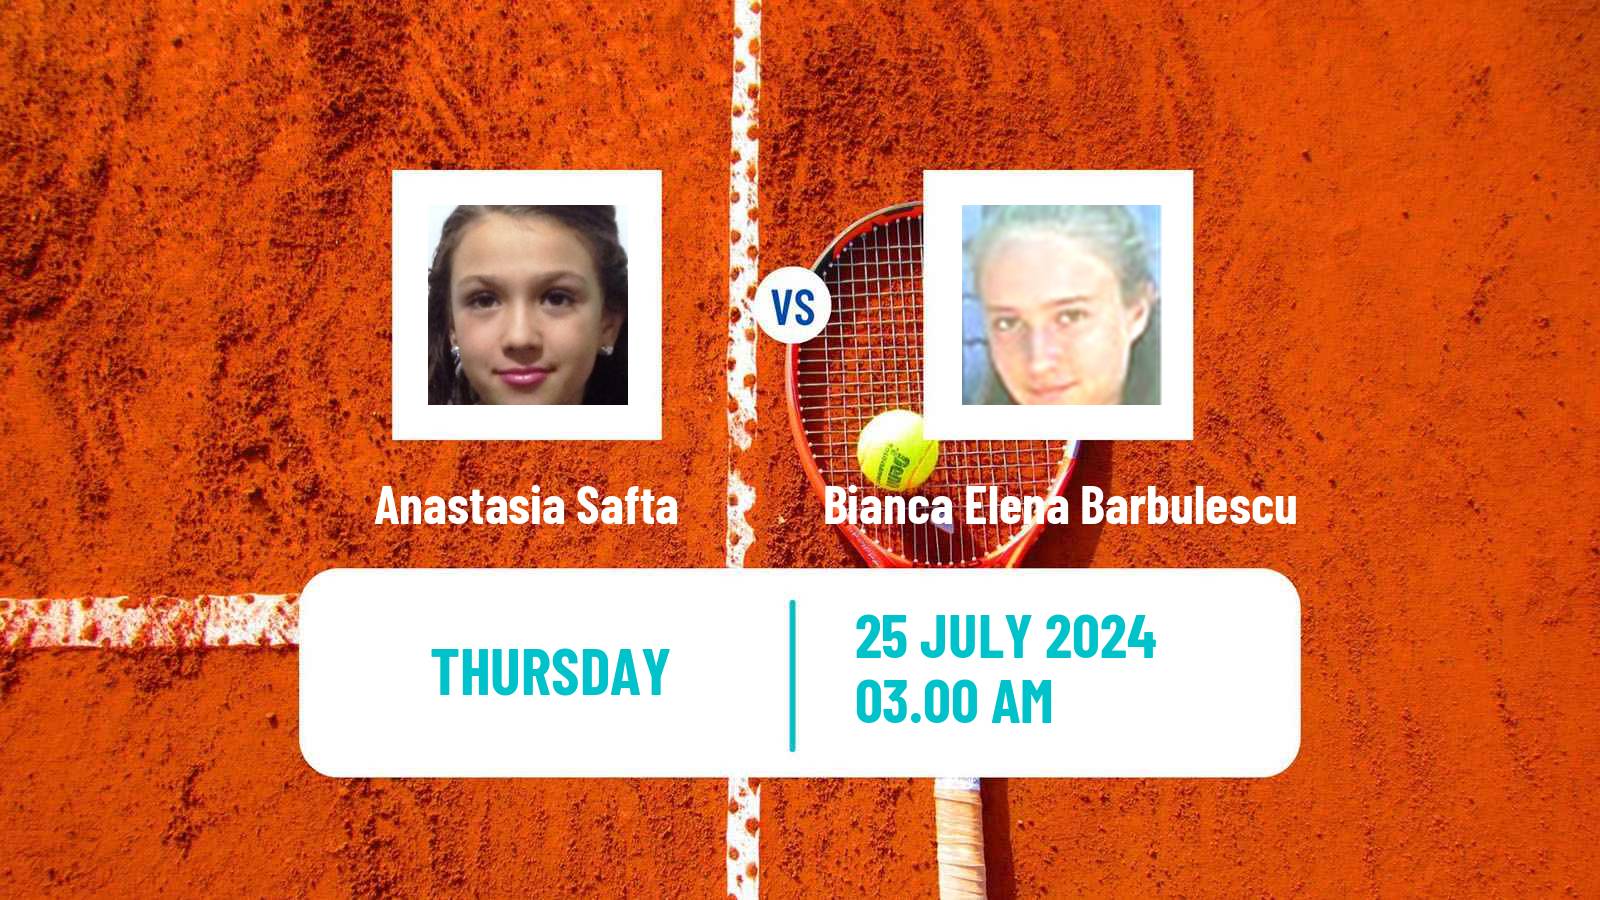 Tennis ITF W15 Satu Mare Women Anastasia Safta - Bianca Elena Barbulescu